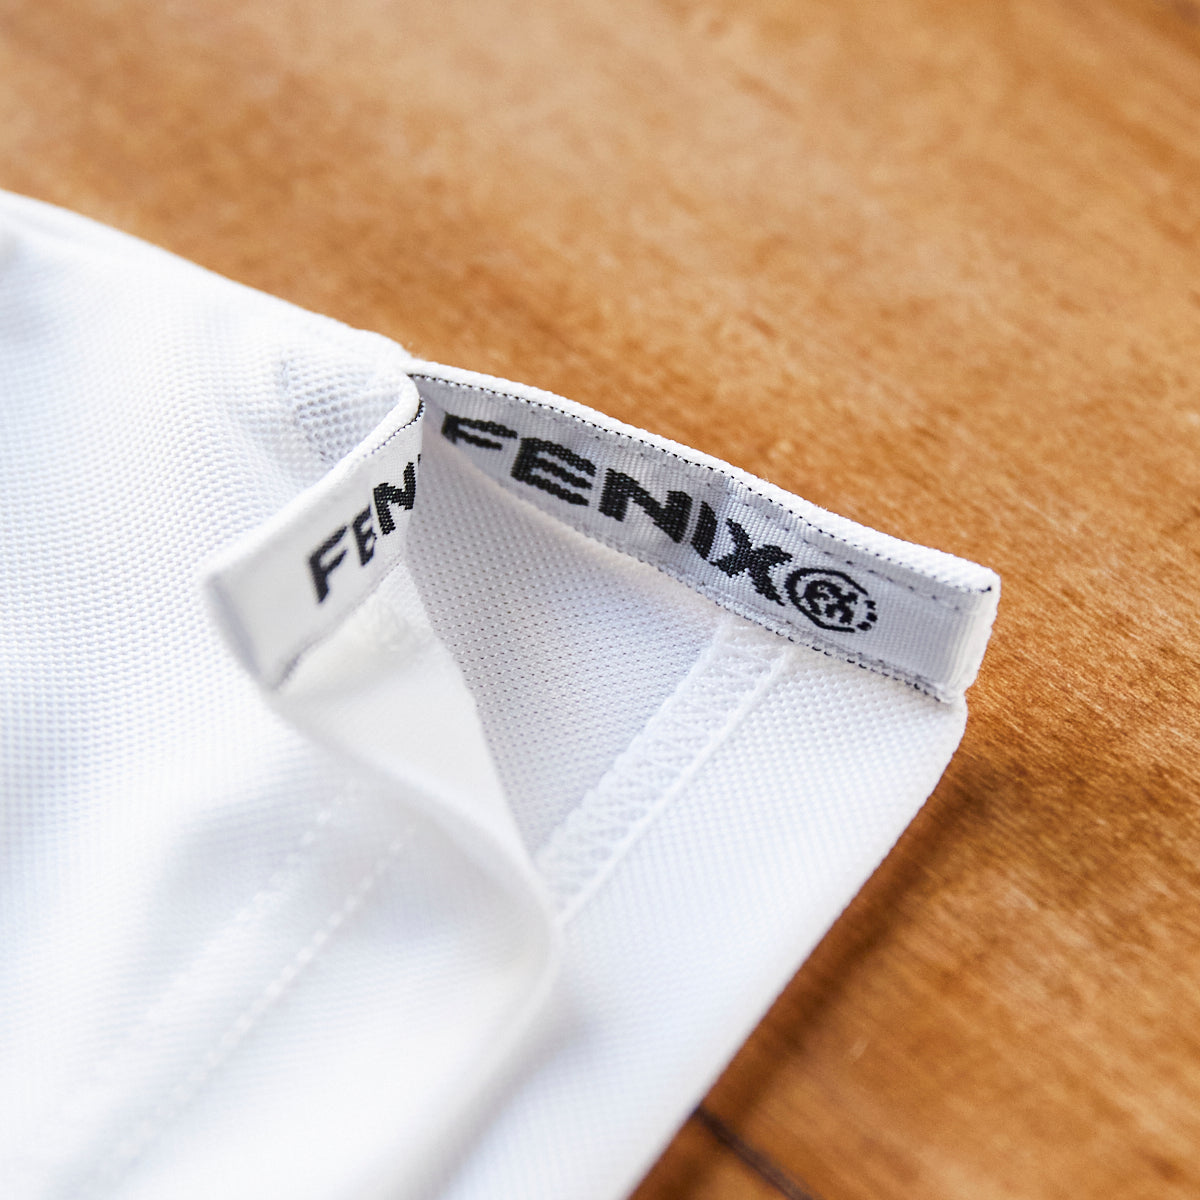 Tay Performance Polo WHITE ■ Fenix x Snell コラボポロシャツ テイ（白）